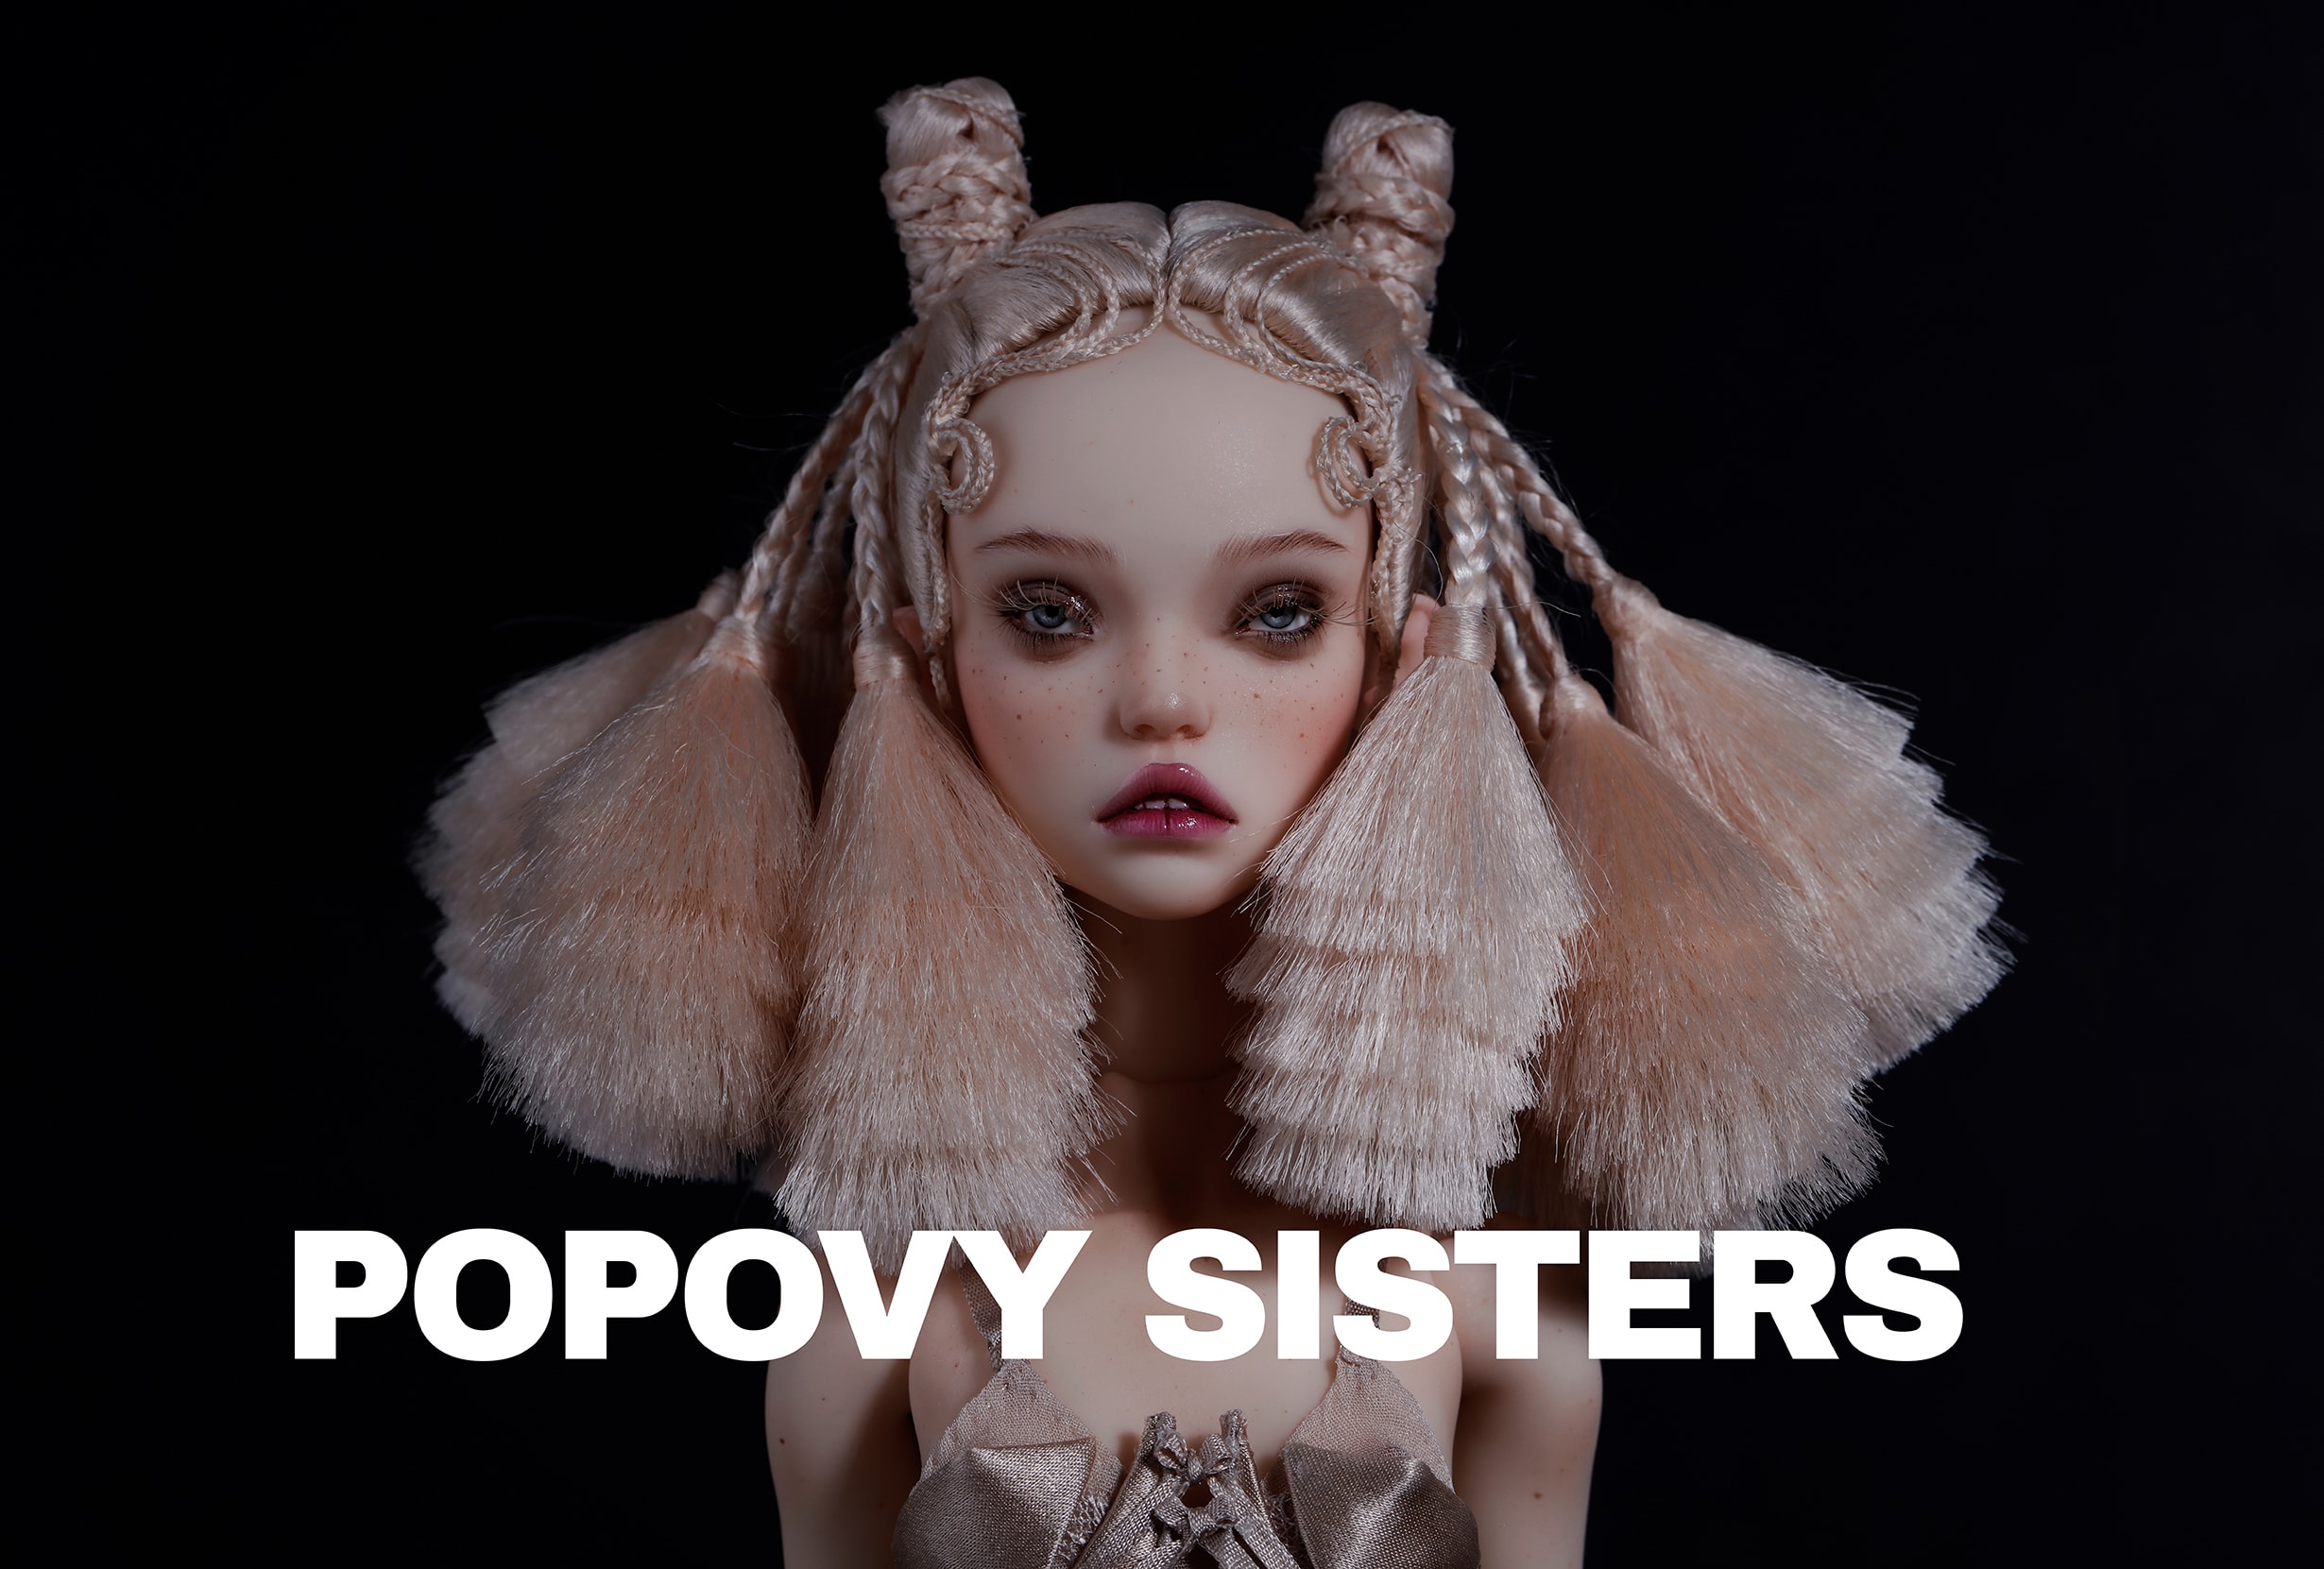 The Popovy Sisters - INFRINGE